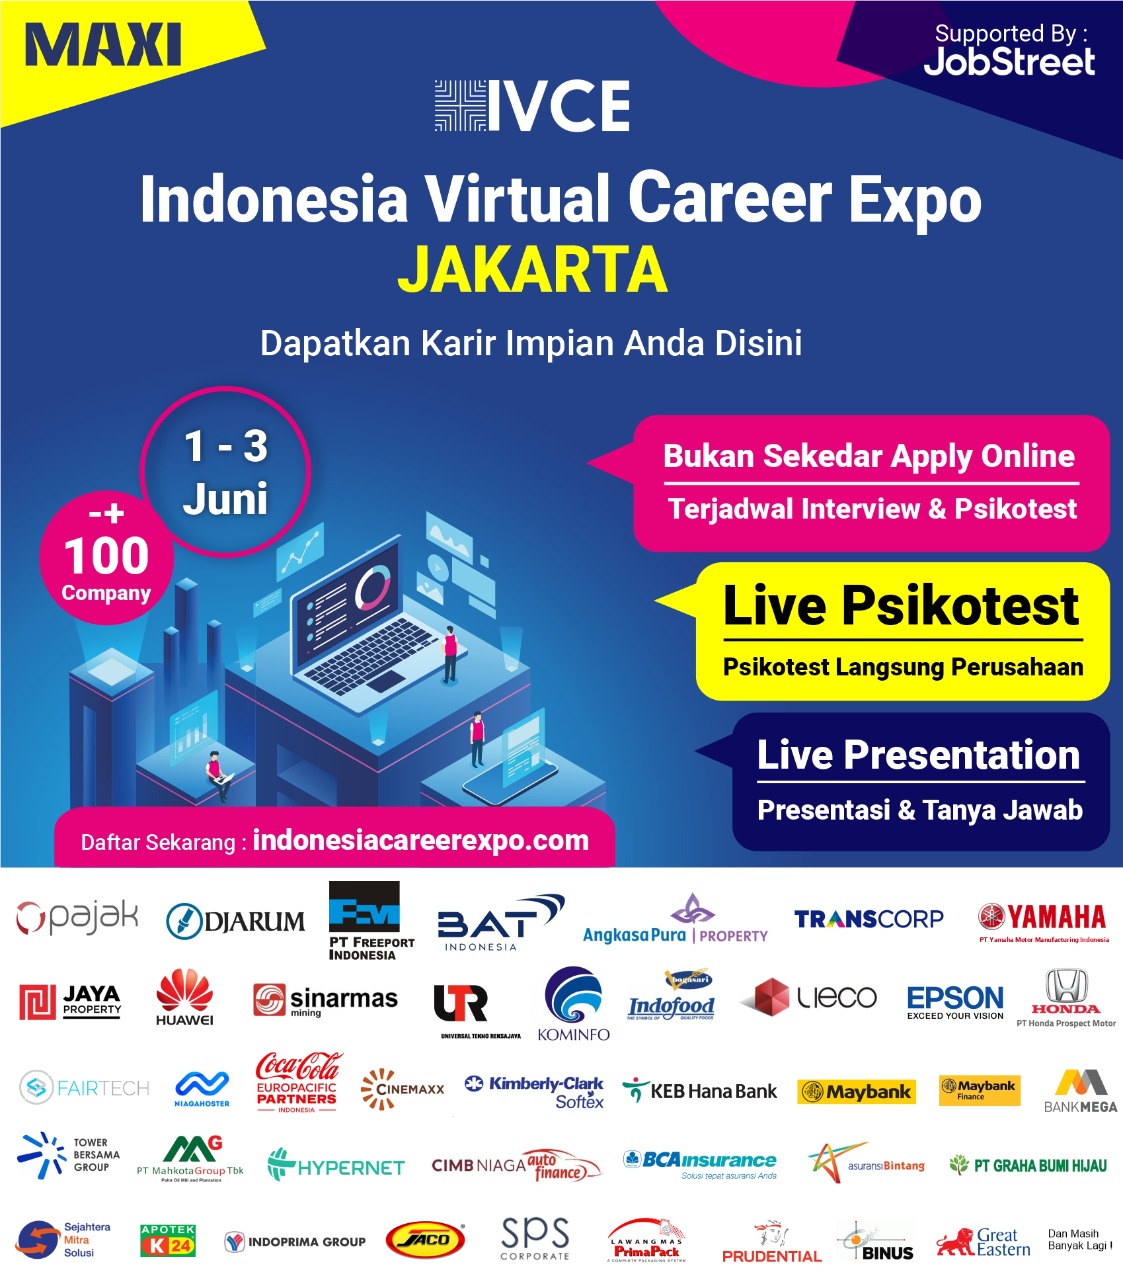 Indonesia Virtual Career Expo Jakarta 2021